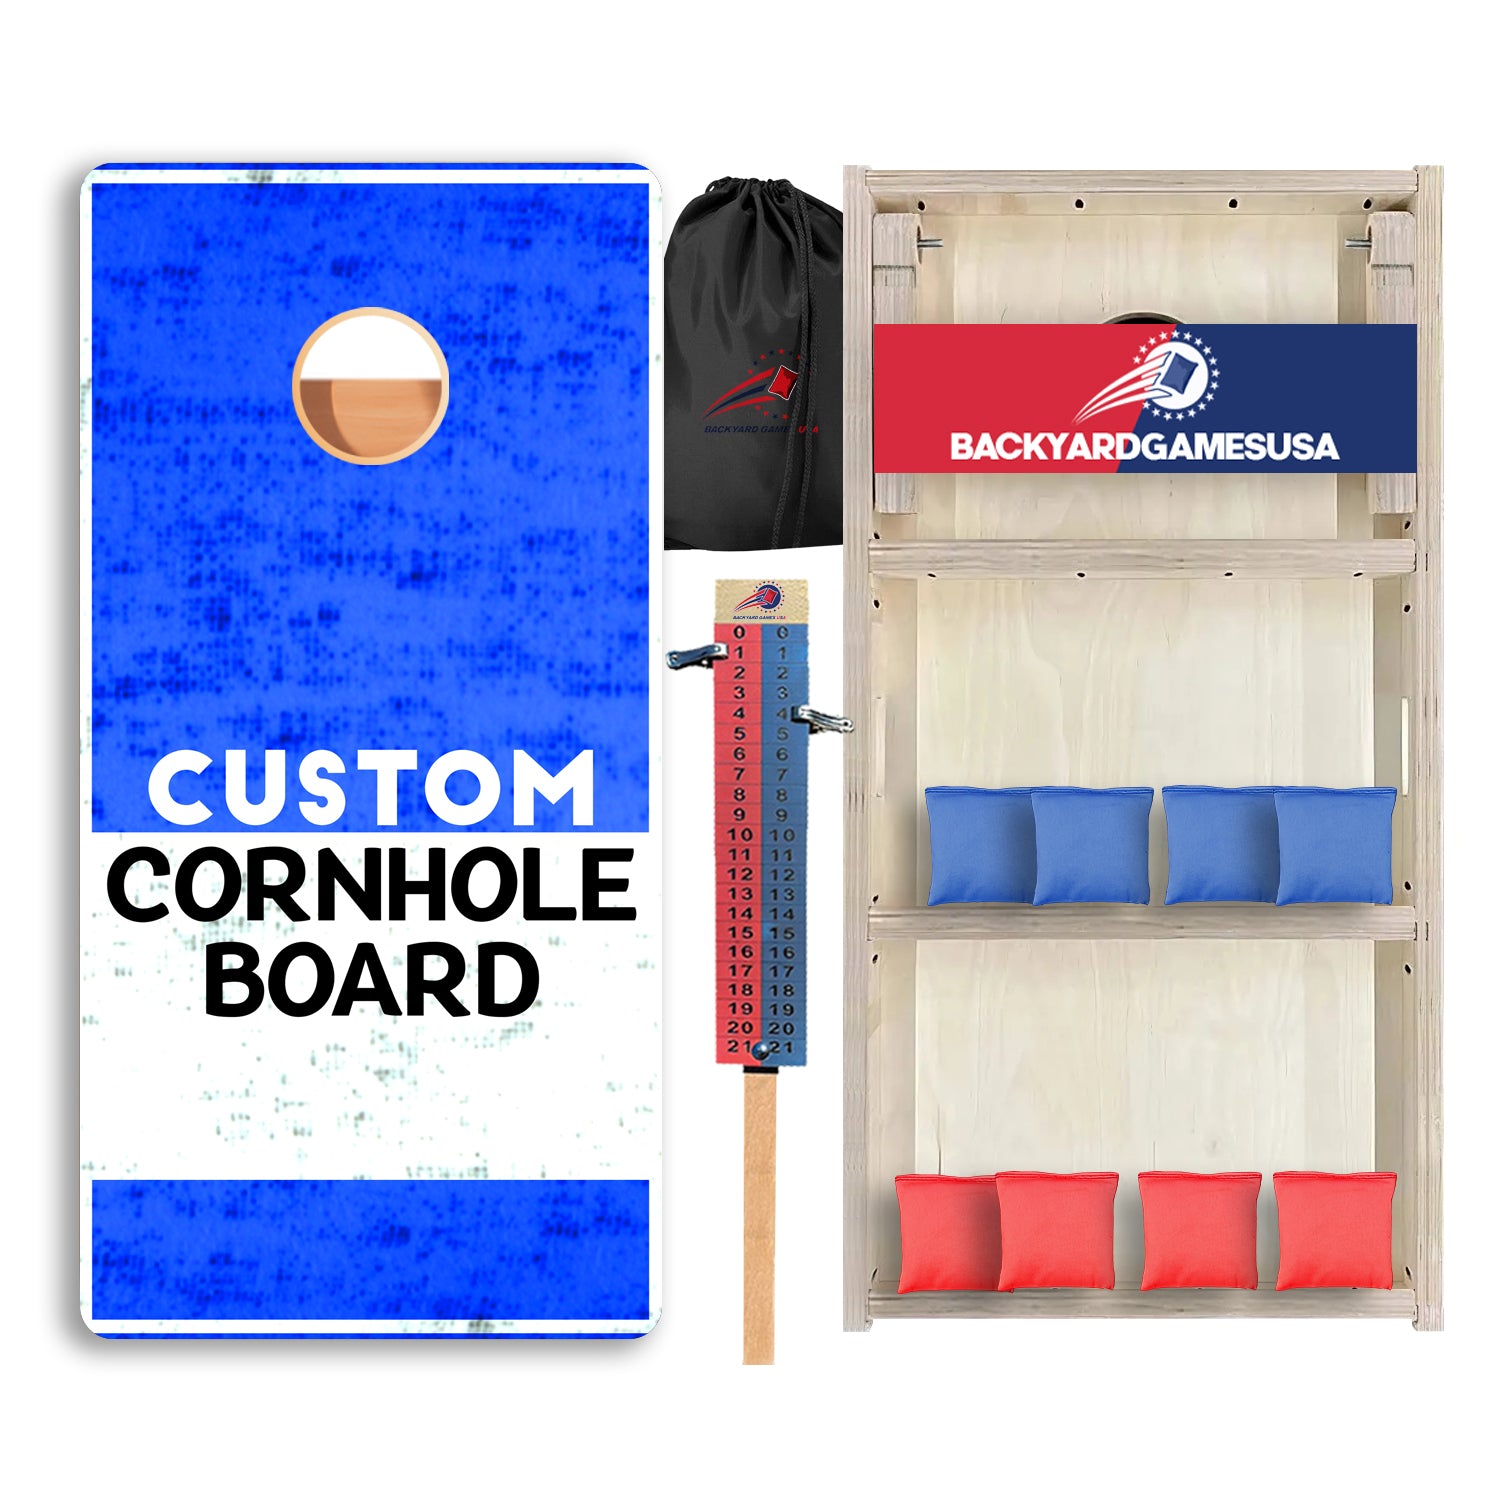 Personalized Cornhole Boards (See Design Process in Description Below)